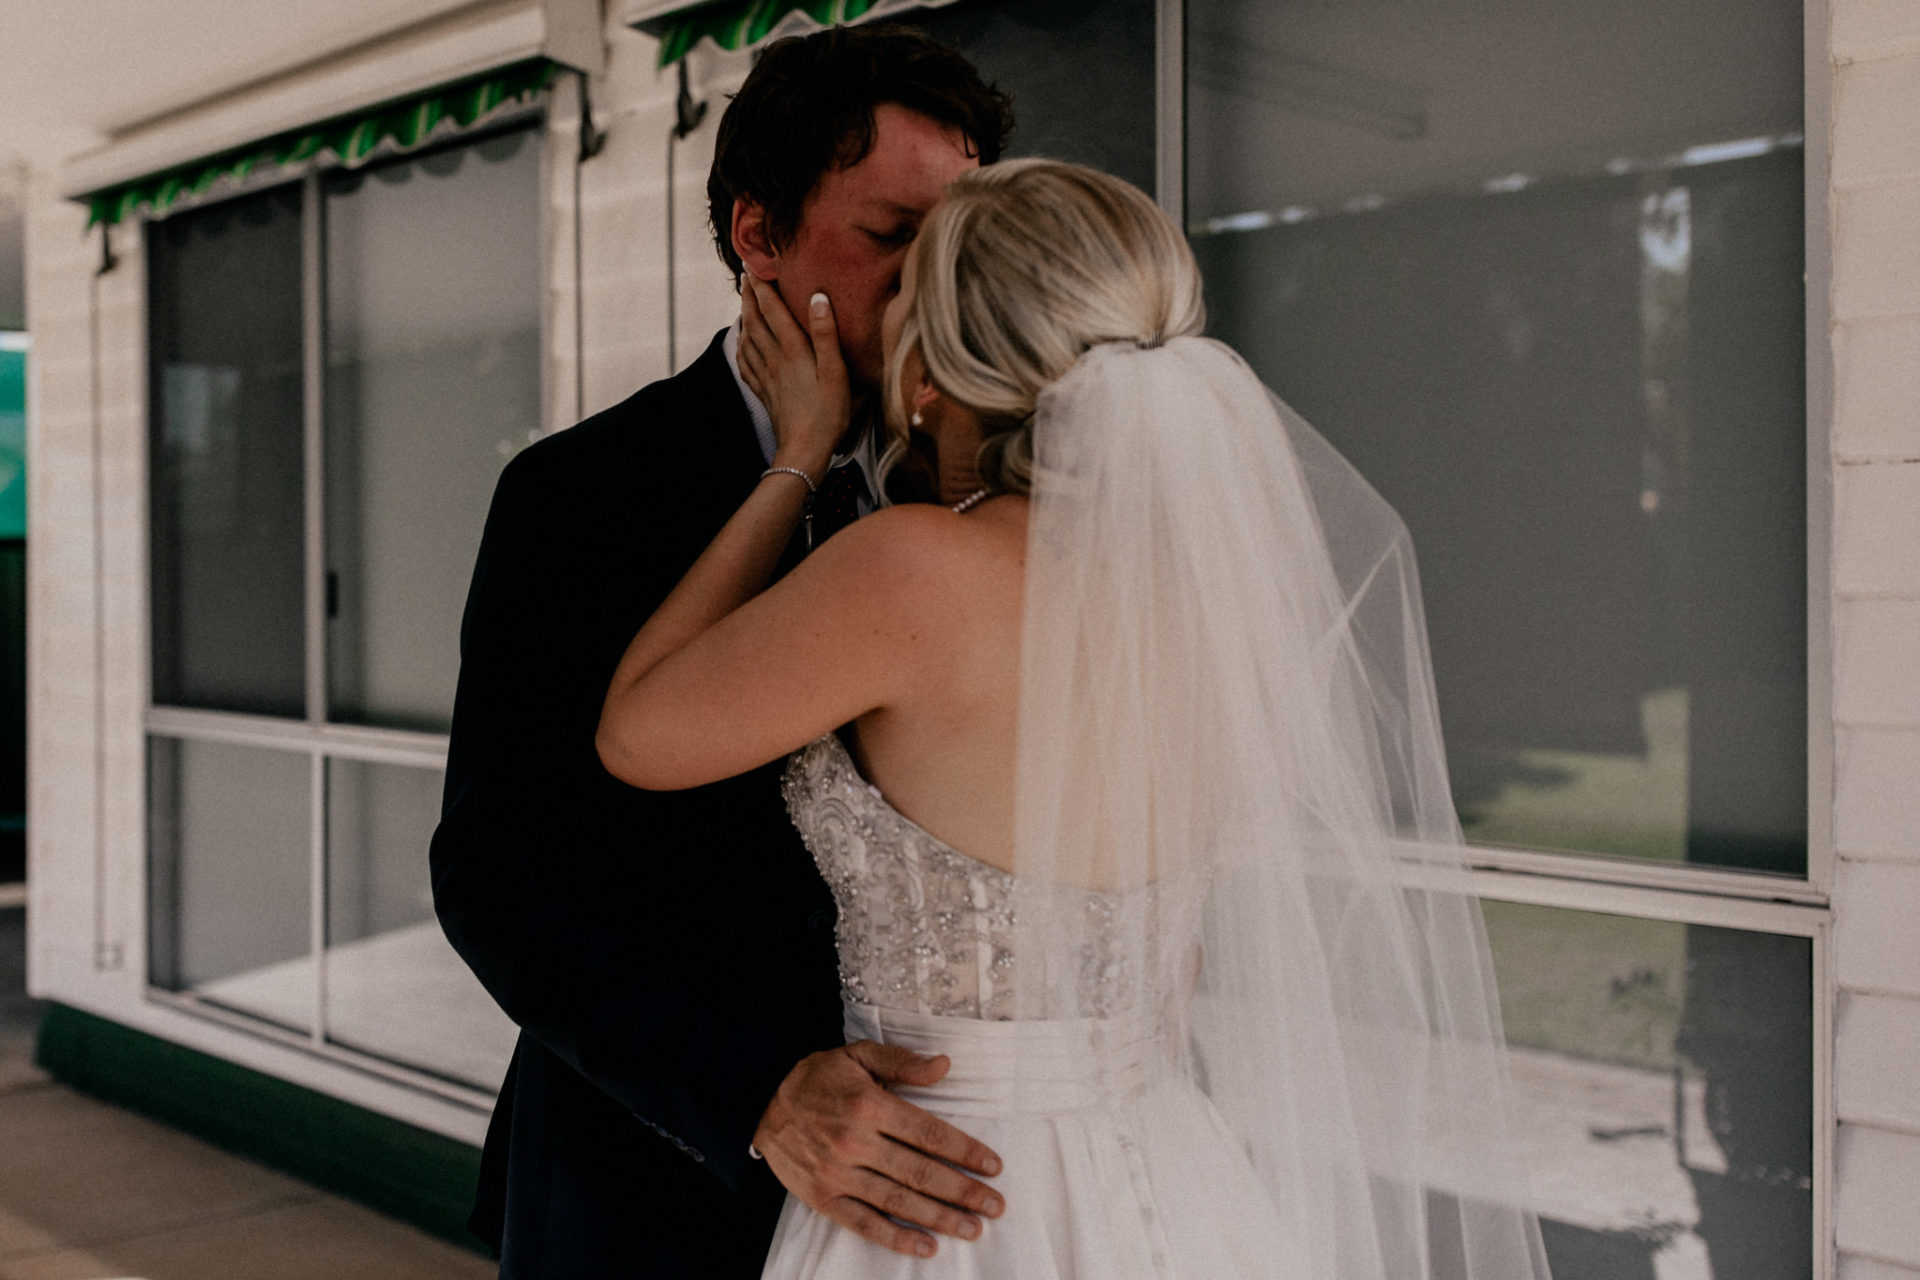 backyard-wedding-australia-melbourne-bride-groom-first-look-dancing-intimate-hug-veil-blue-suit